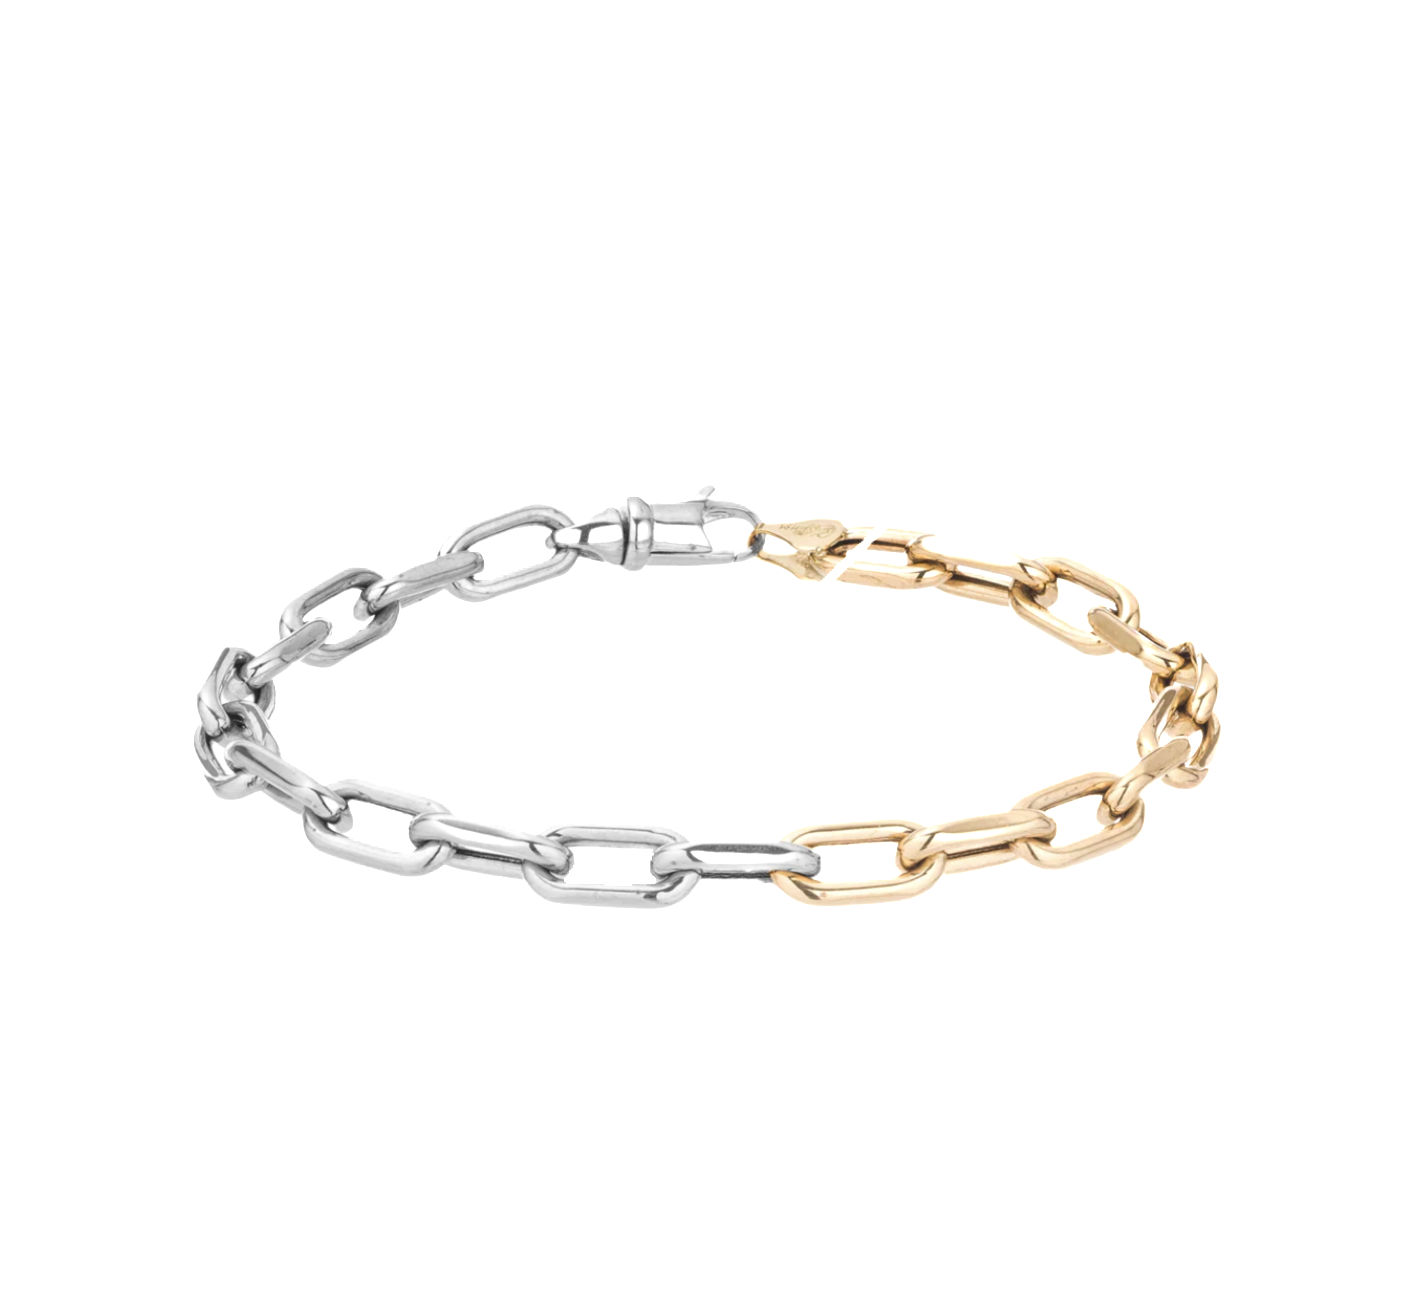 5.3mm Mixed Metal Italian Chain Link Bracelet